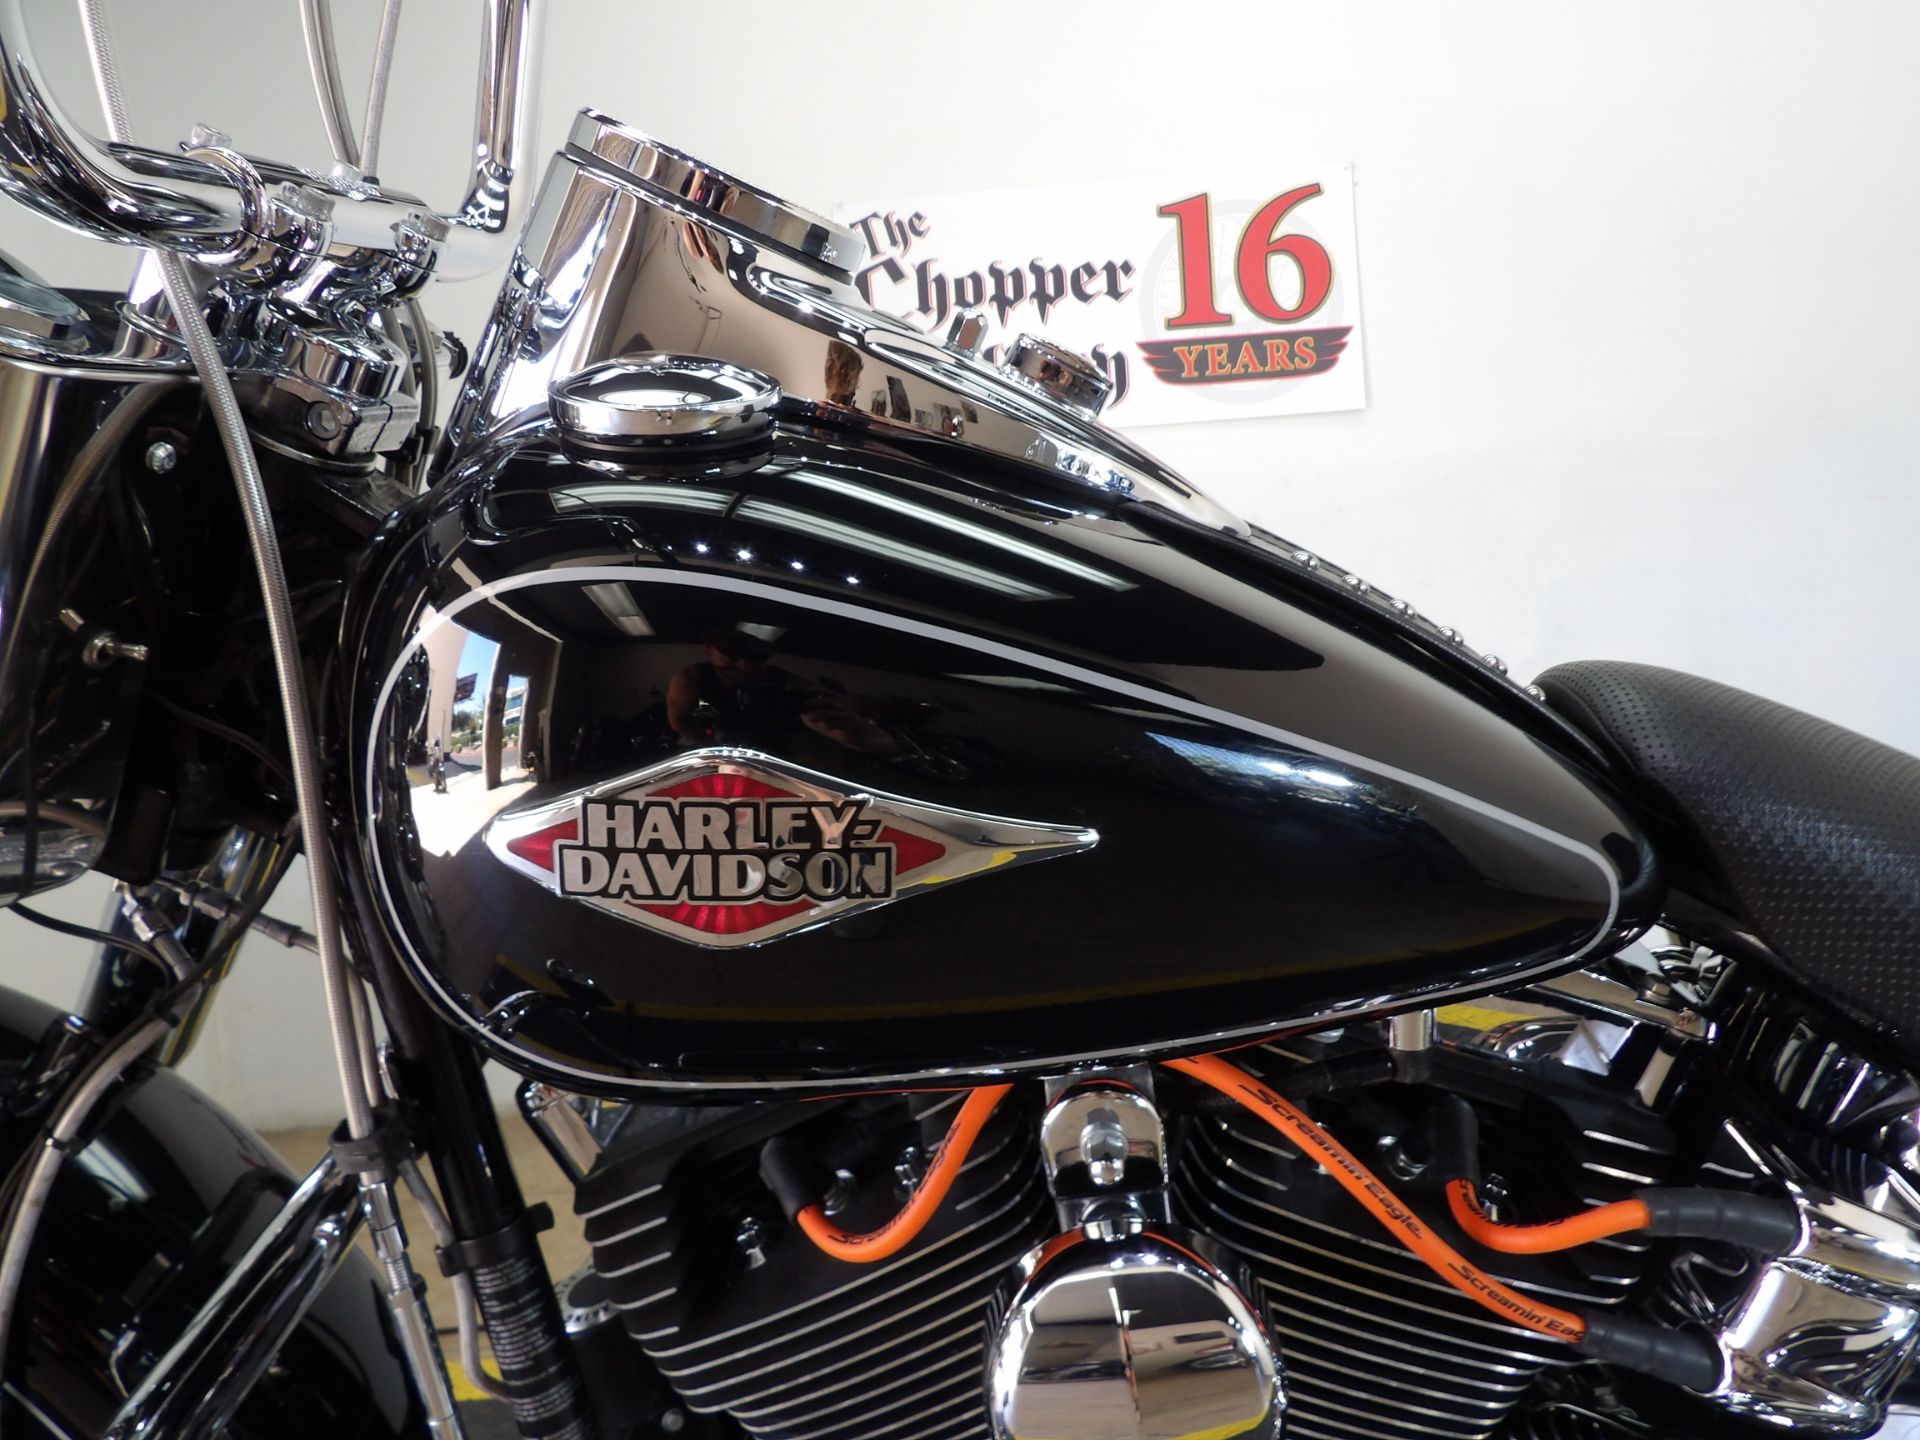 2012 Harley-Davidson Heritage Softail® Classic in Temecula, California - Photo 14